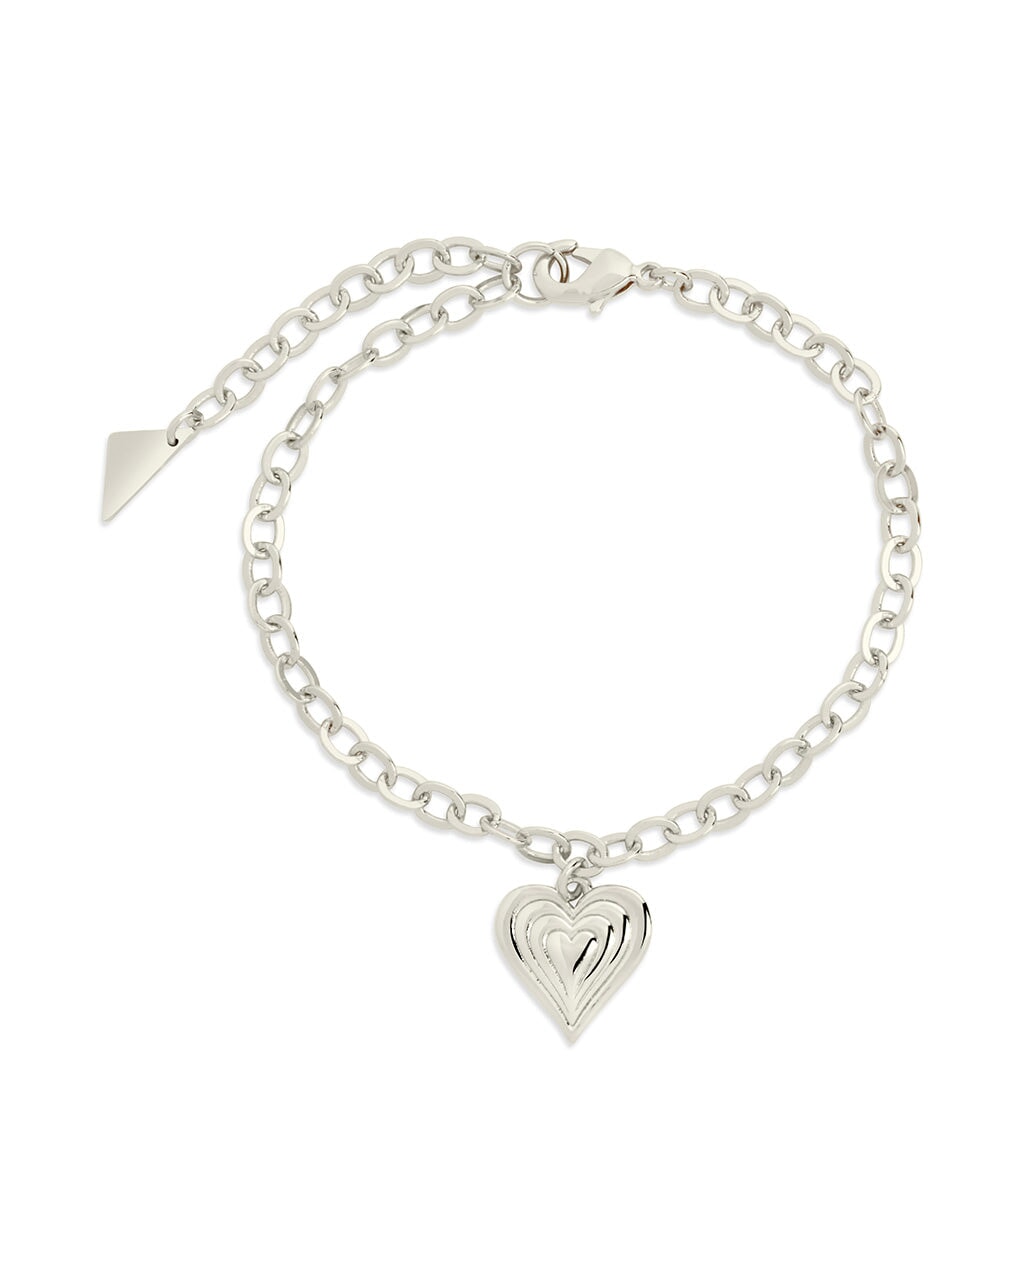 Buy Sterling Silver Heart Charm Bracelet, Heart Tag Sterling Silver Bracelet,  Heart Tag Jewelry, Blank Sterling Heart Tag, Trendy Sterling Link Online in  India - Etsy